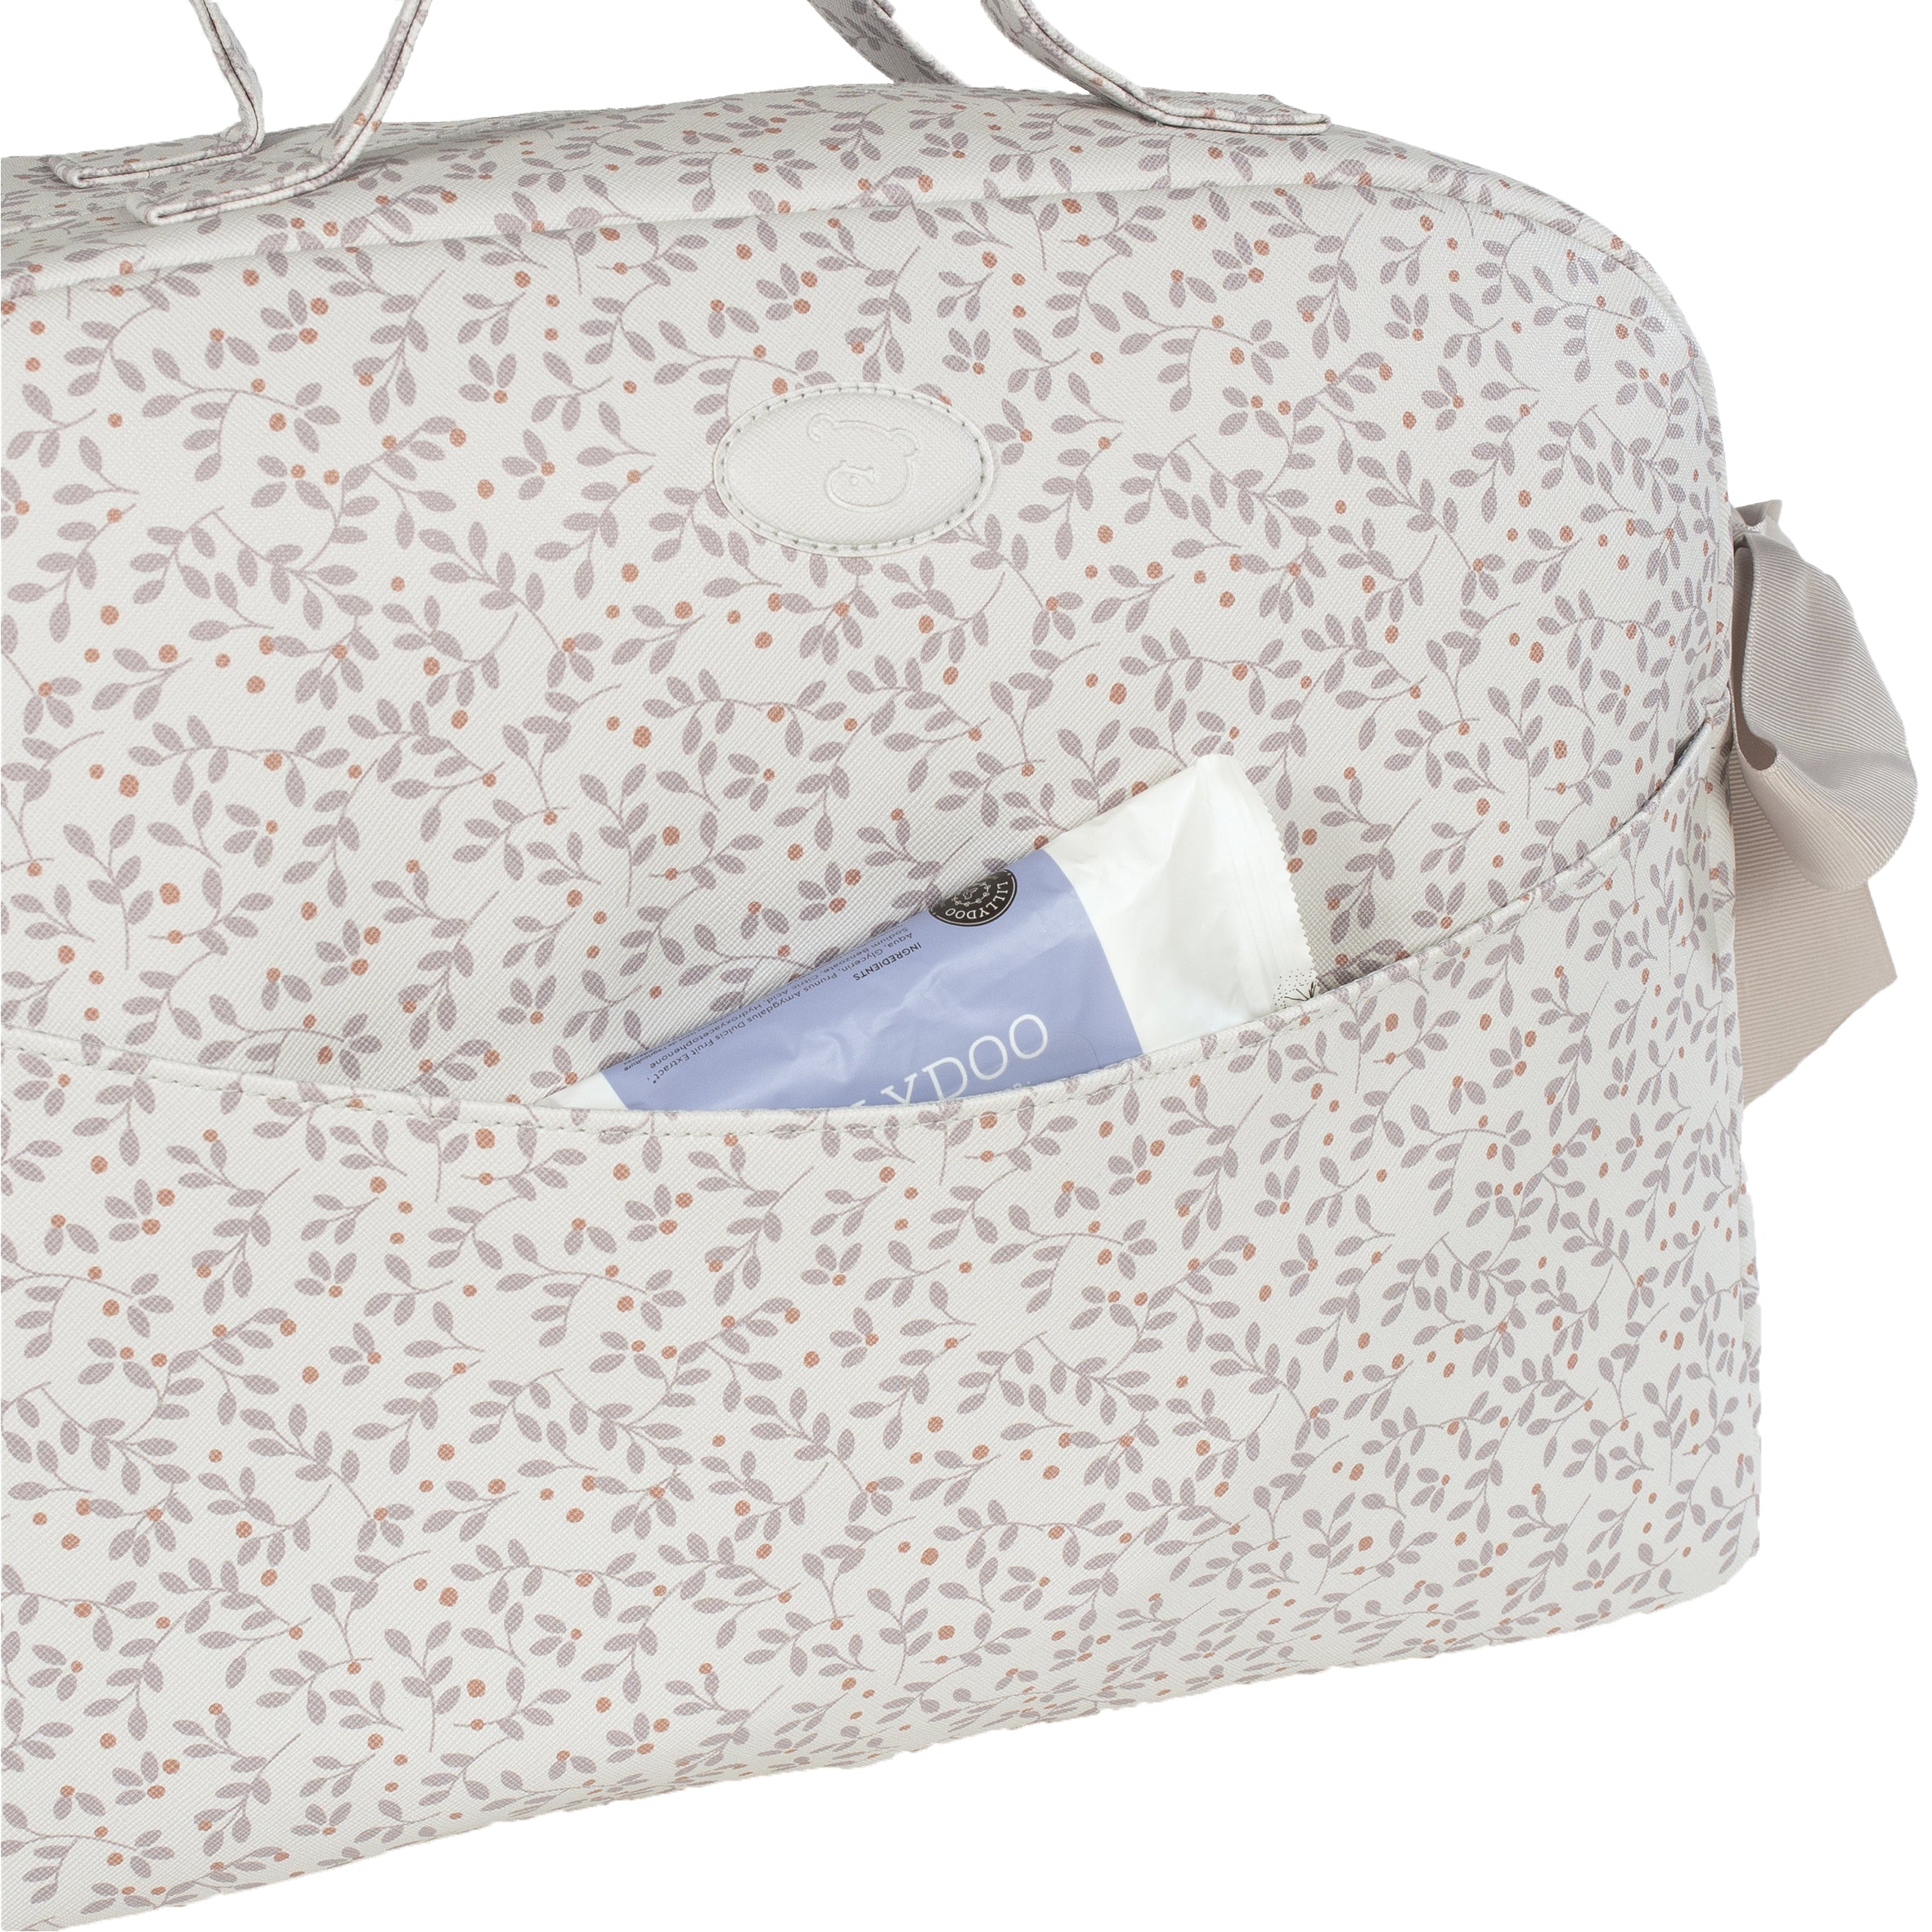 Pasito a Pasito Berries Grey Diaper Changing Bag